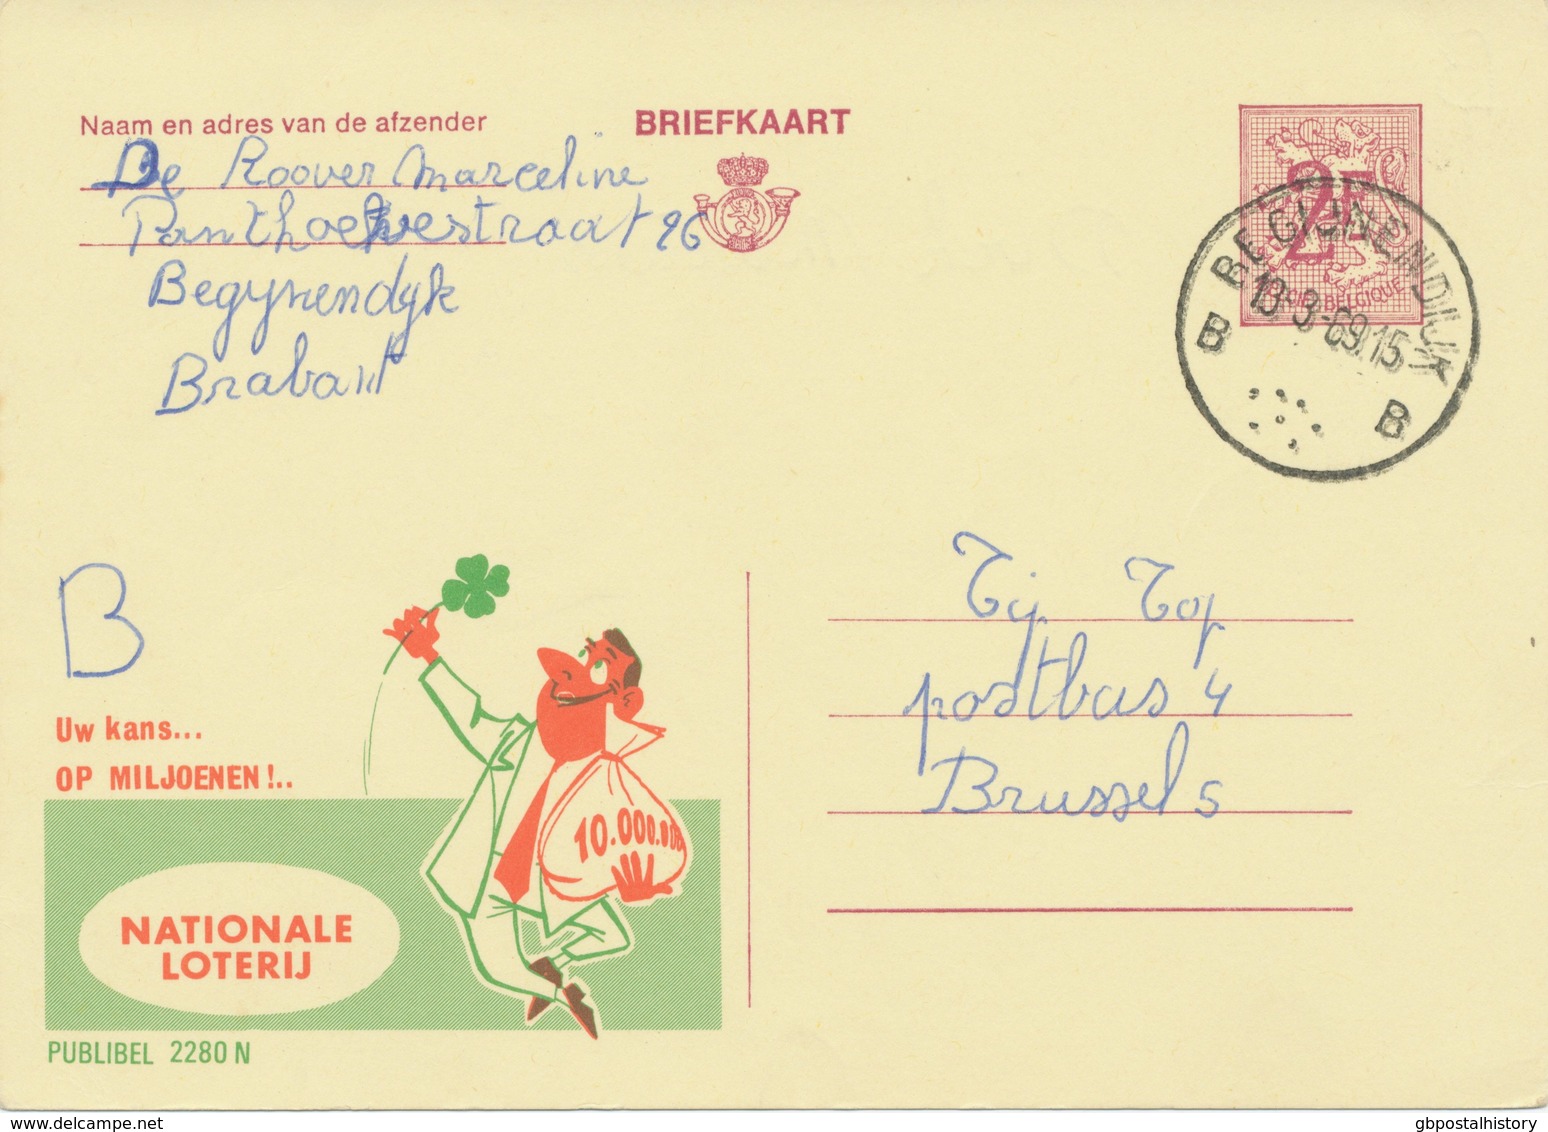 BELGIUM BEGIJNENDIJK B SC With Dots 1969 (Postal Stationery 2 F, PUBLIBEL 2280 N) Varitey: Look At The Mouth - Errors & Oddities